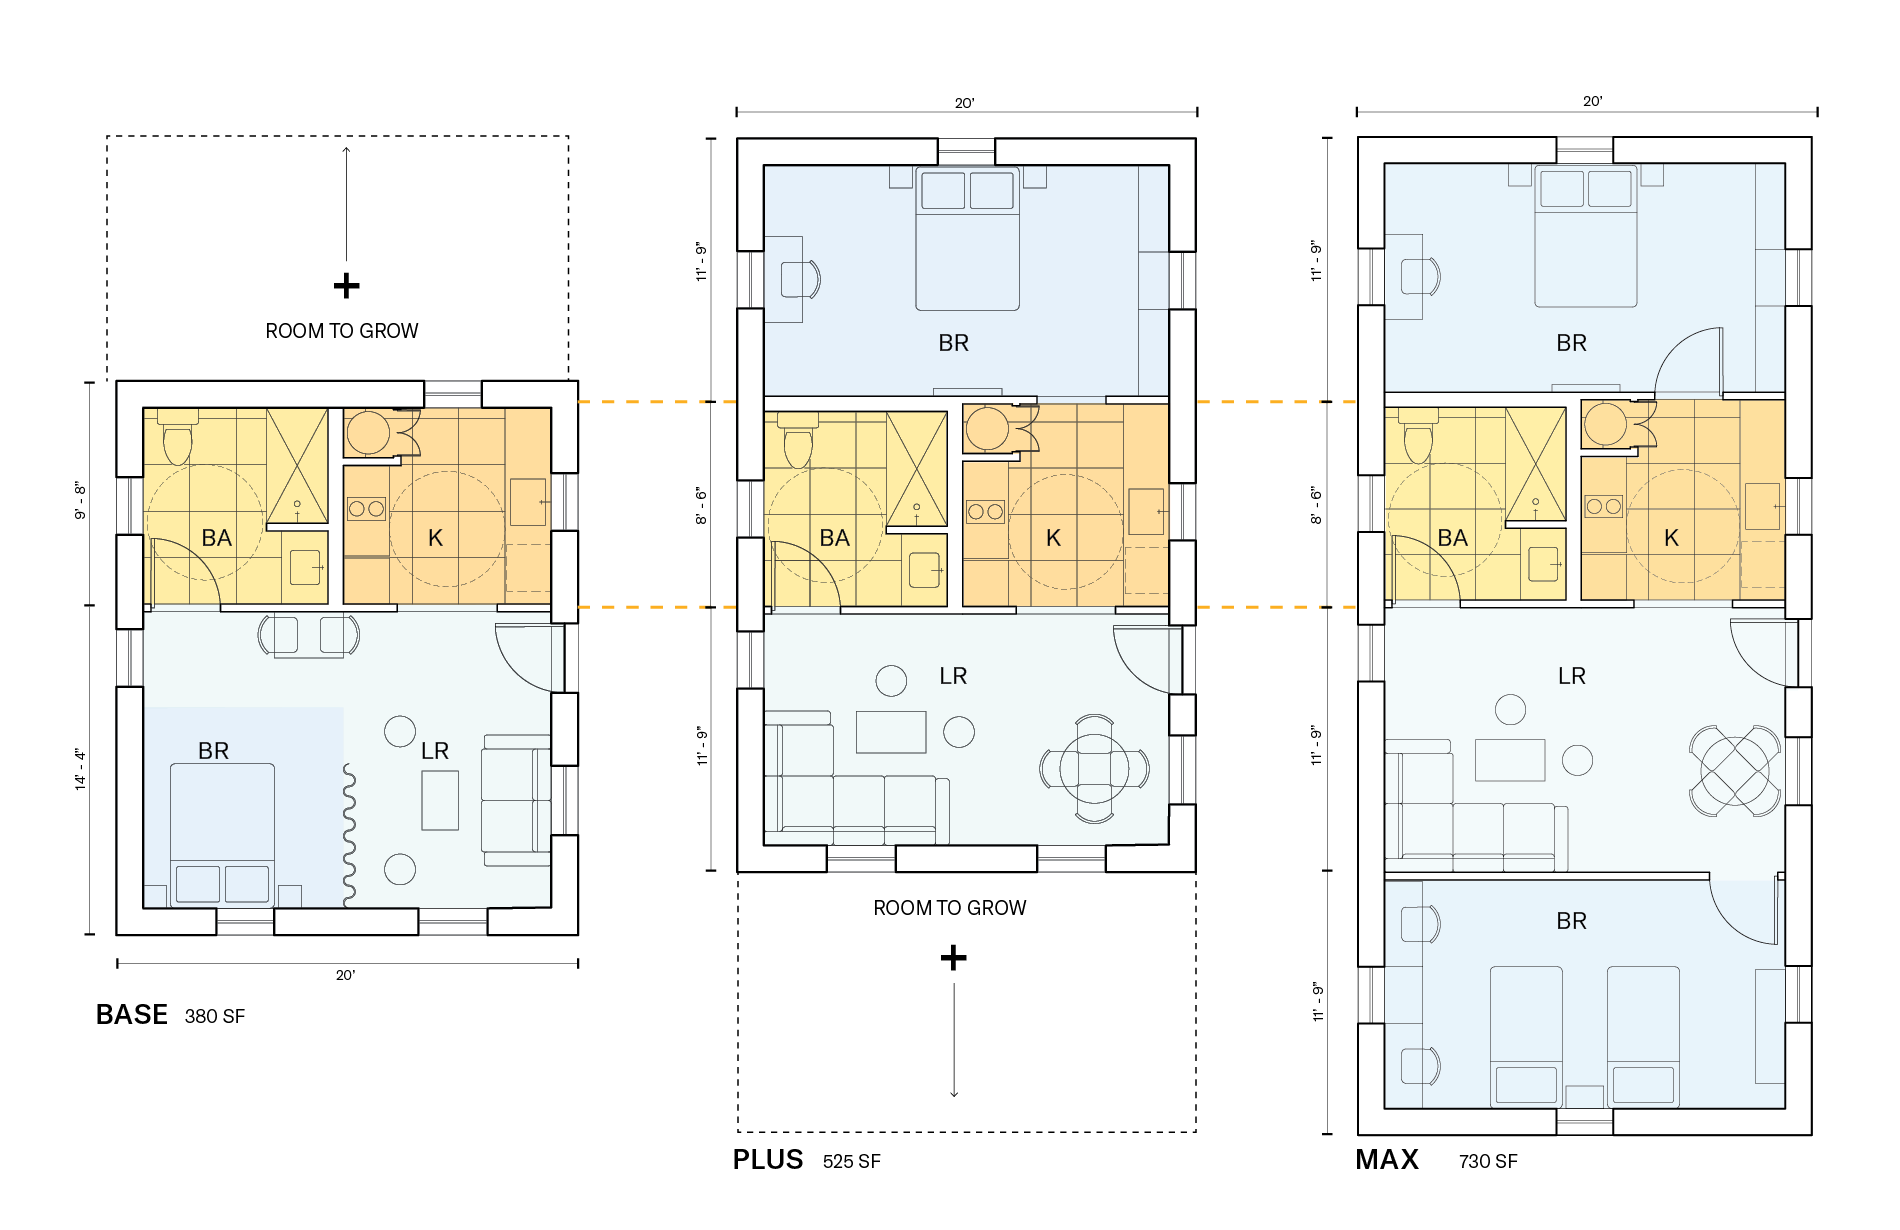 Plan of ADU showing studio BASE unit, 1 bedroom PLUS unit, and 2 bedroom MAX unit